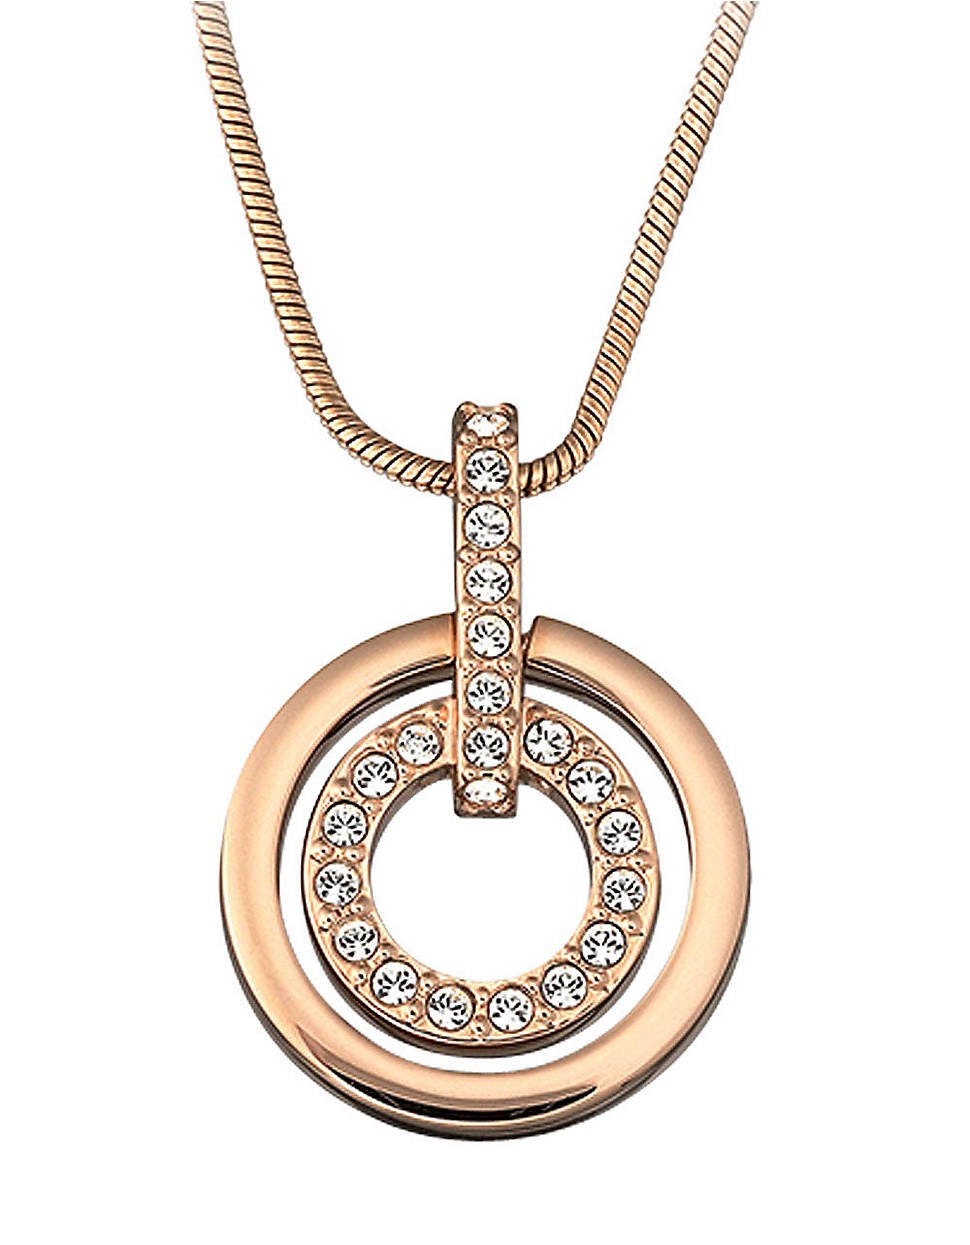 Lyst - Swarovski Rose Gold Plated Circle Pendant Necklace in Metallic